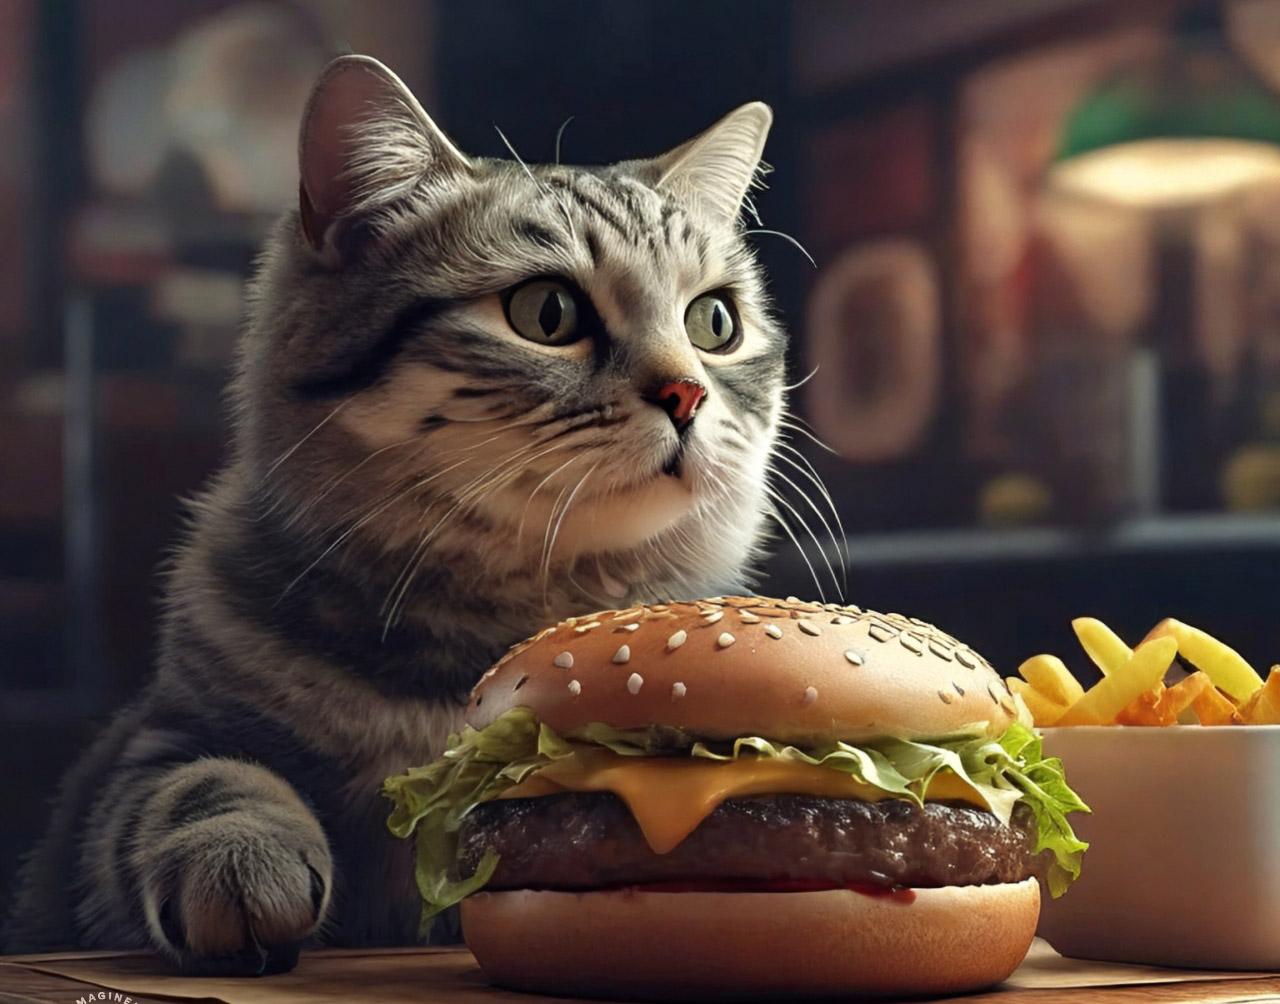 can cats eat burger Can Cats Eat Burger? [Mcdonalds Burger? Raw or Cooked?]